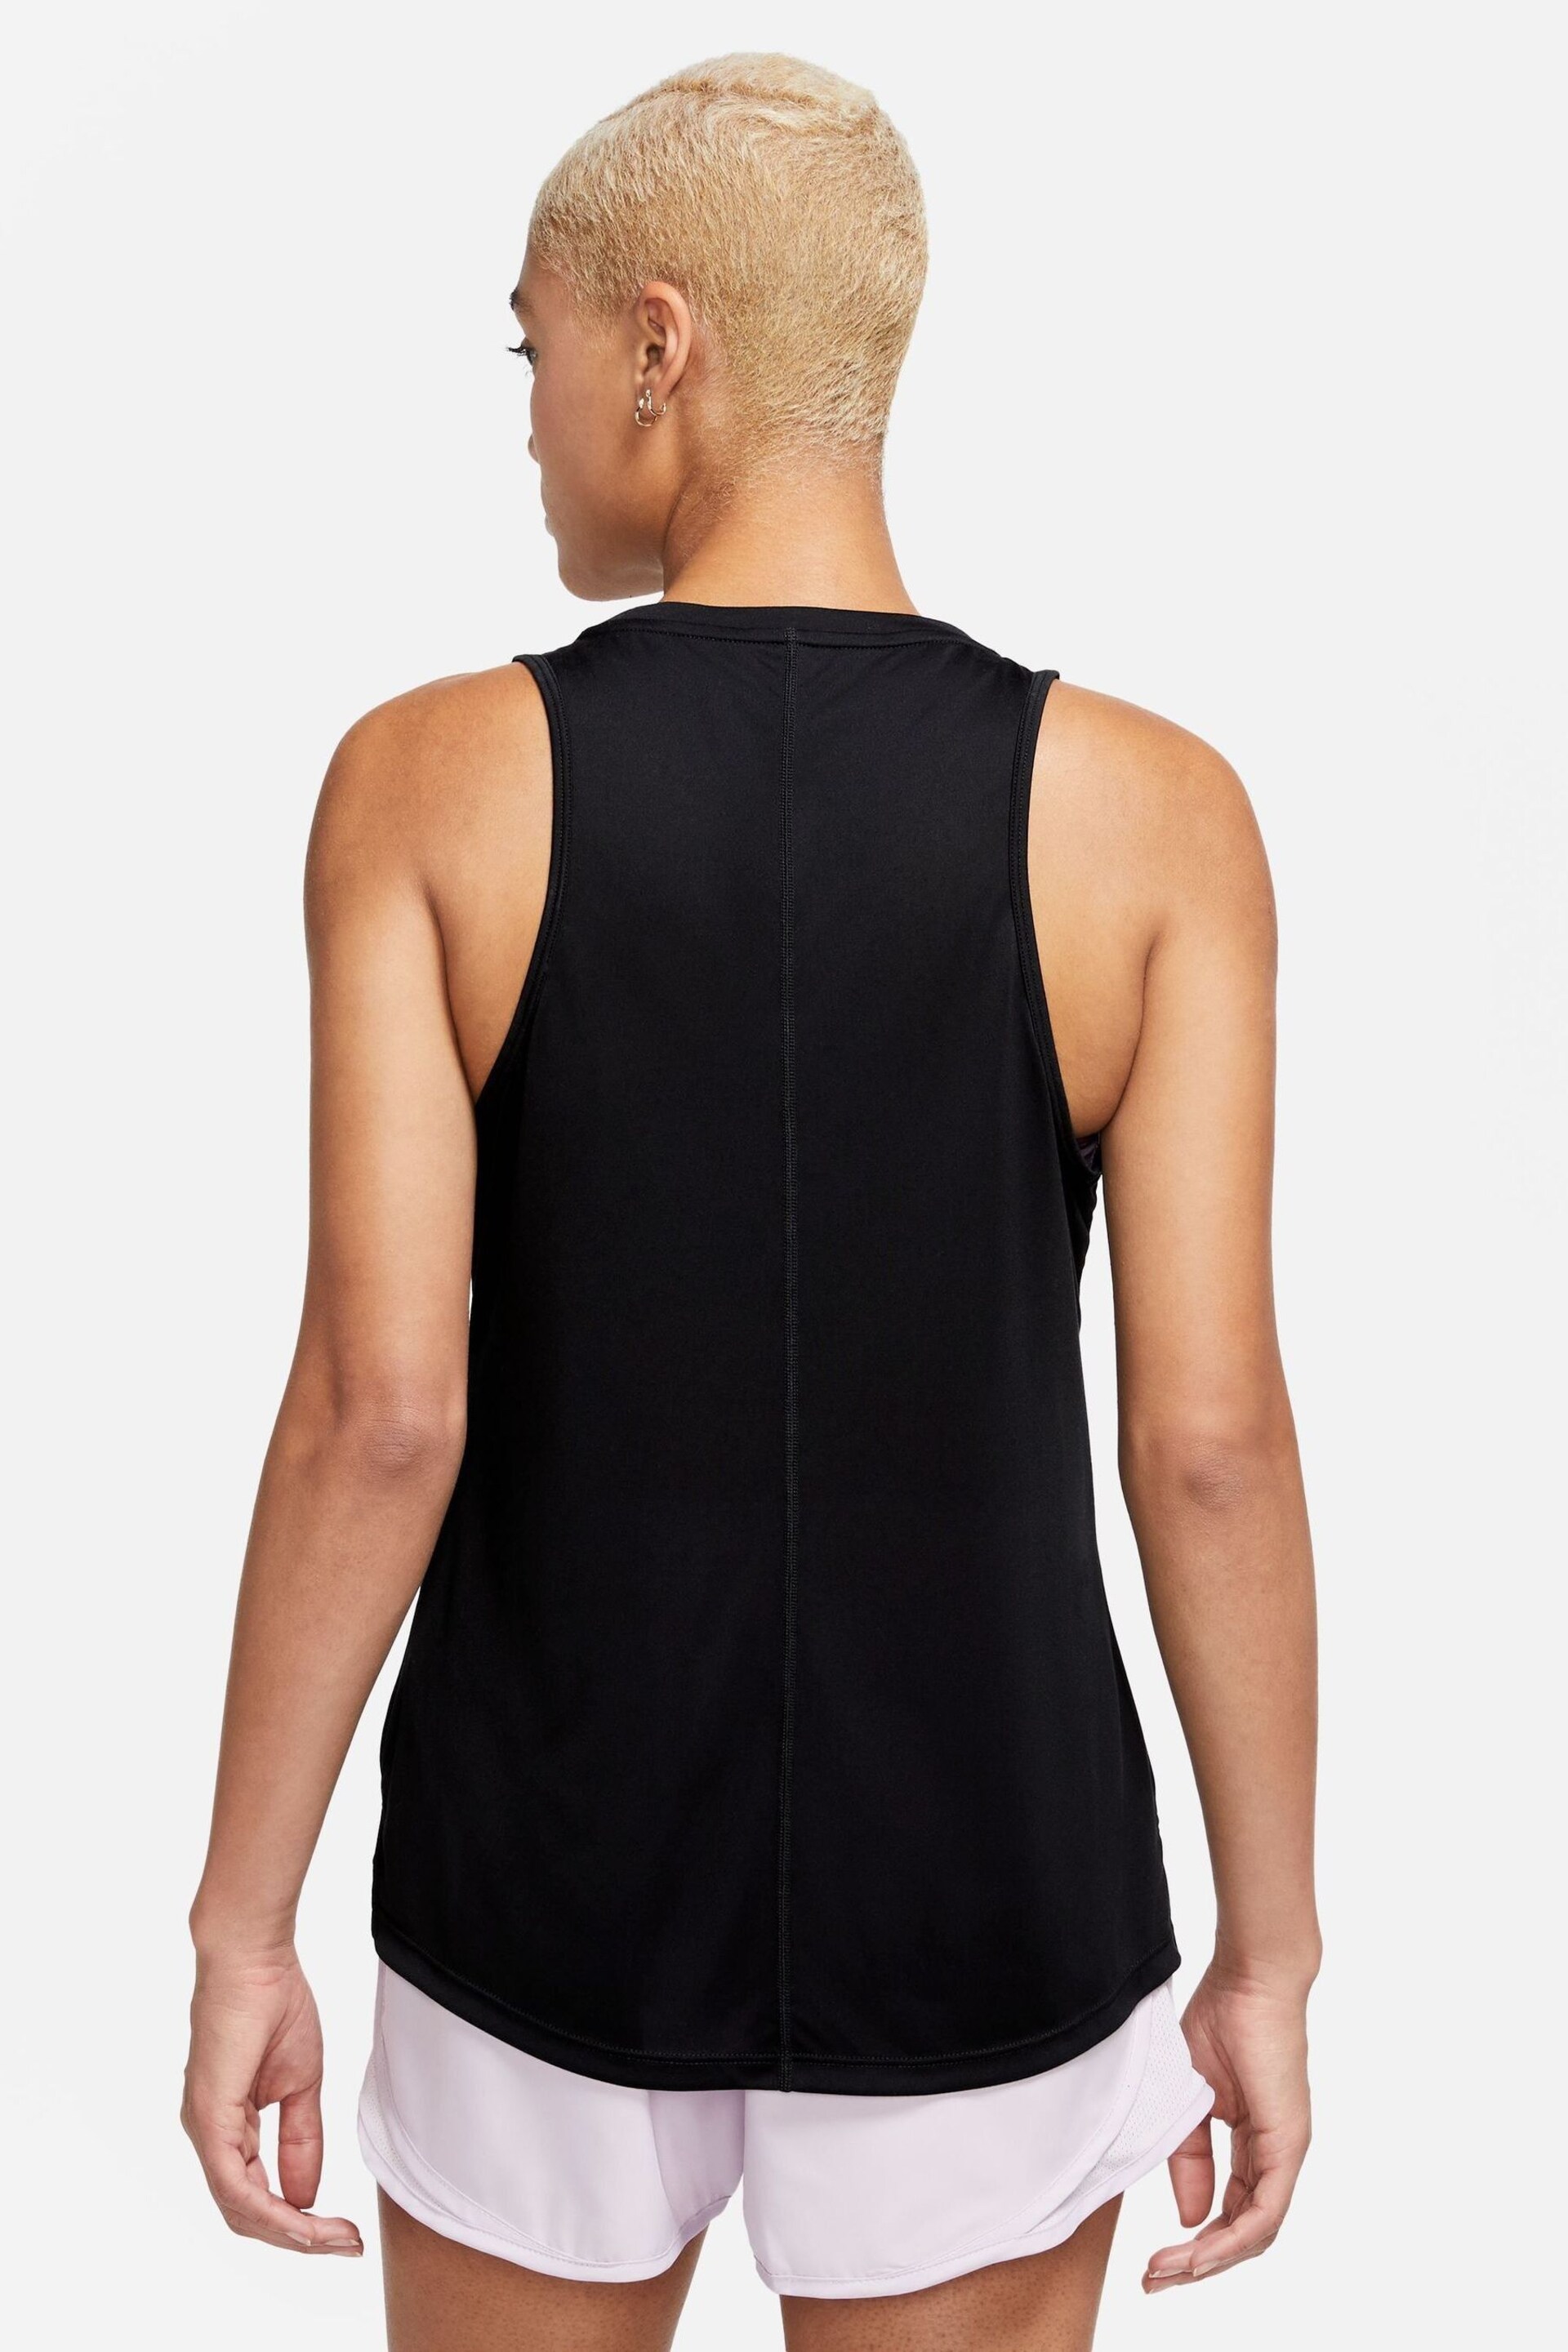 Nike Black Dri-FIT Swoosh Vest Running Top - Image 2 of 3